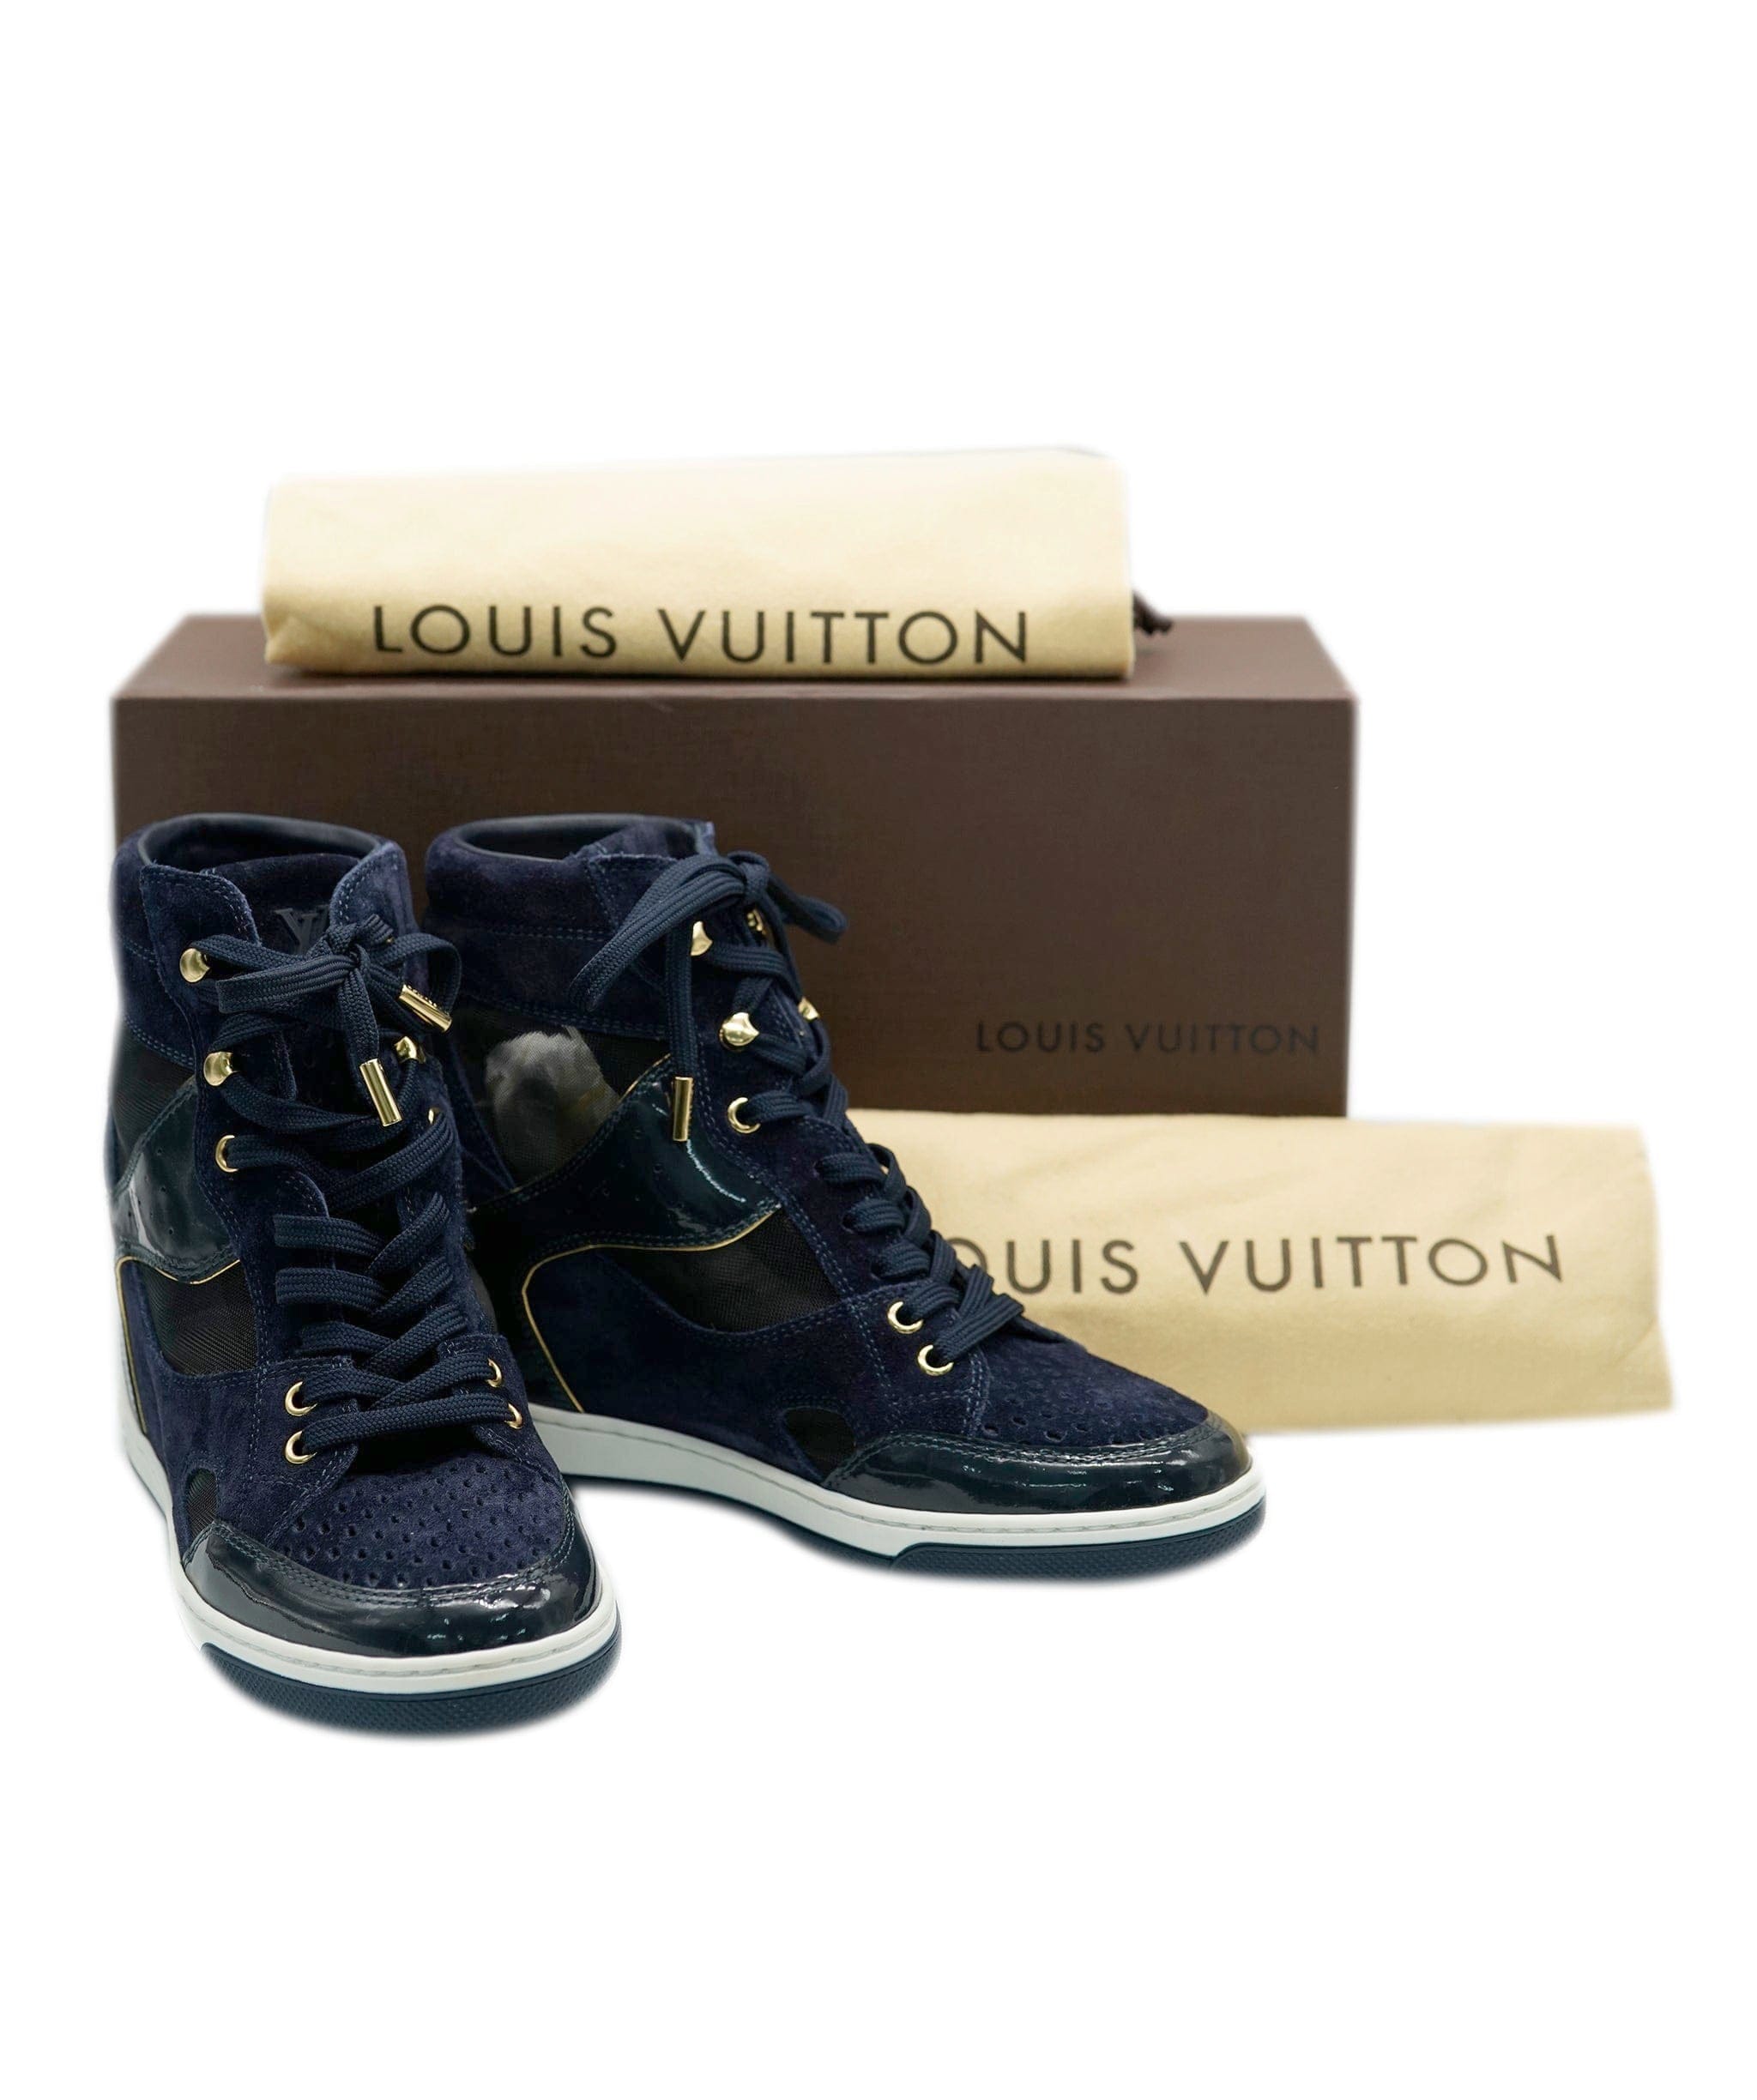 Louis Vuitton Louis Vuitton midnight blue suede trainers  - AJC0455